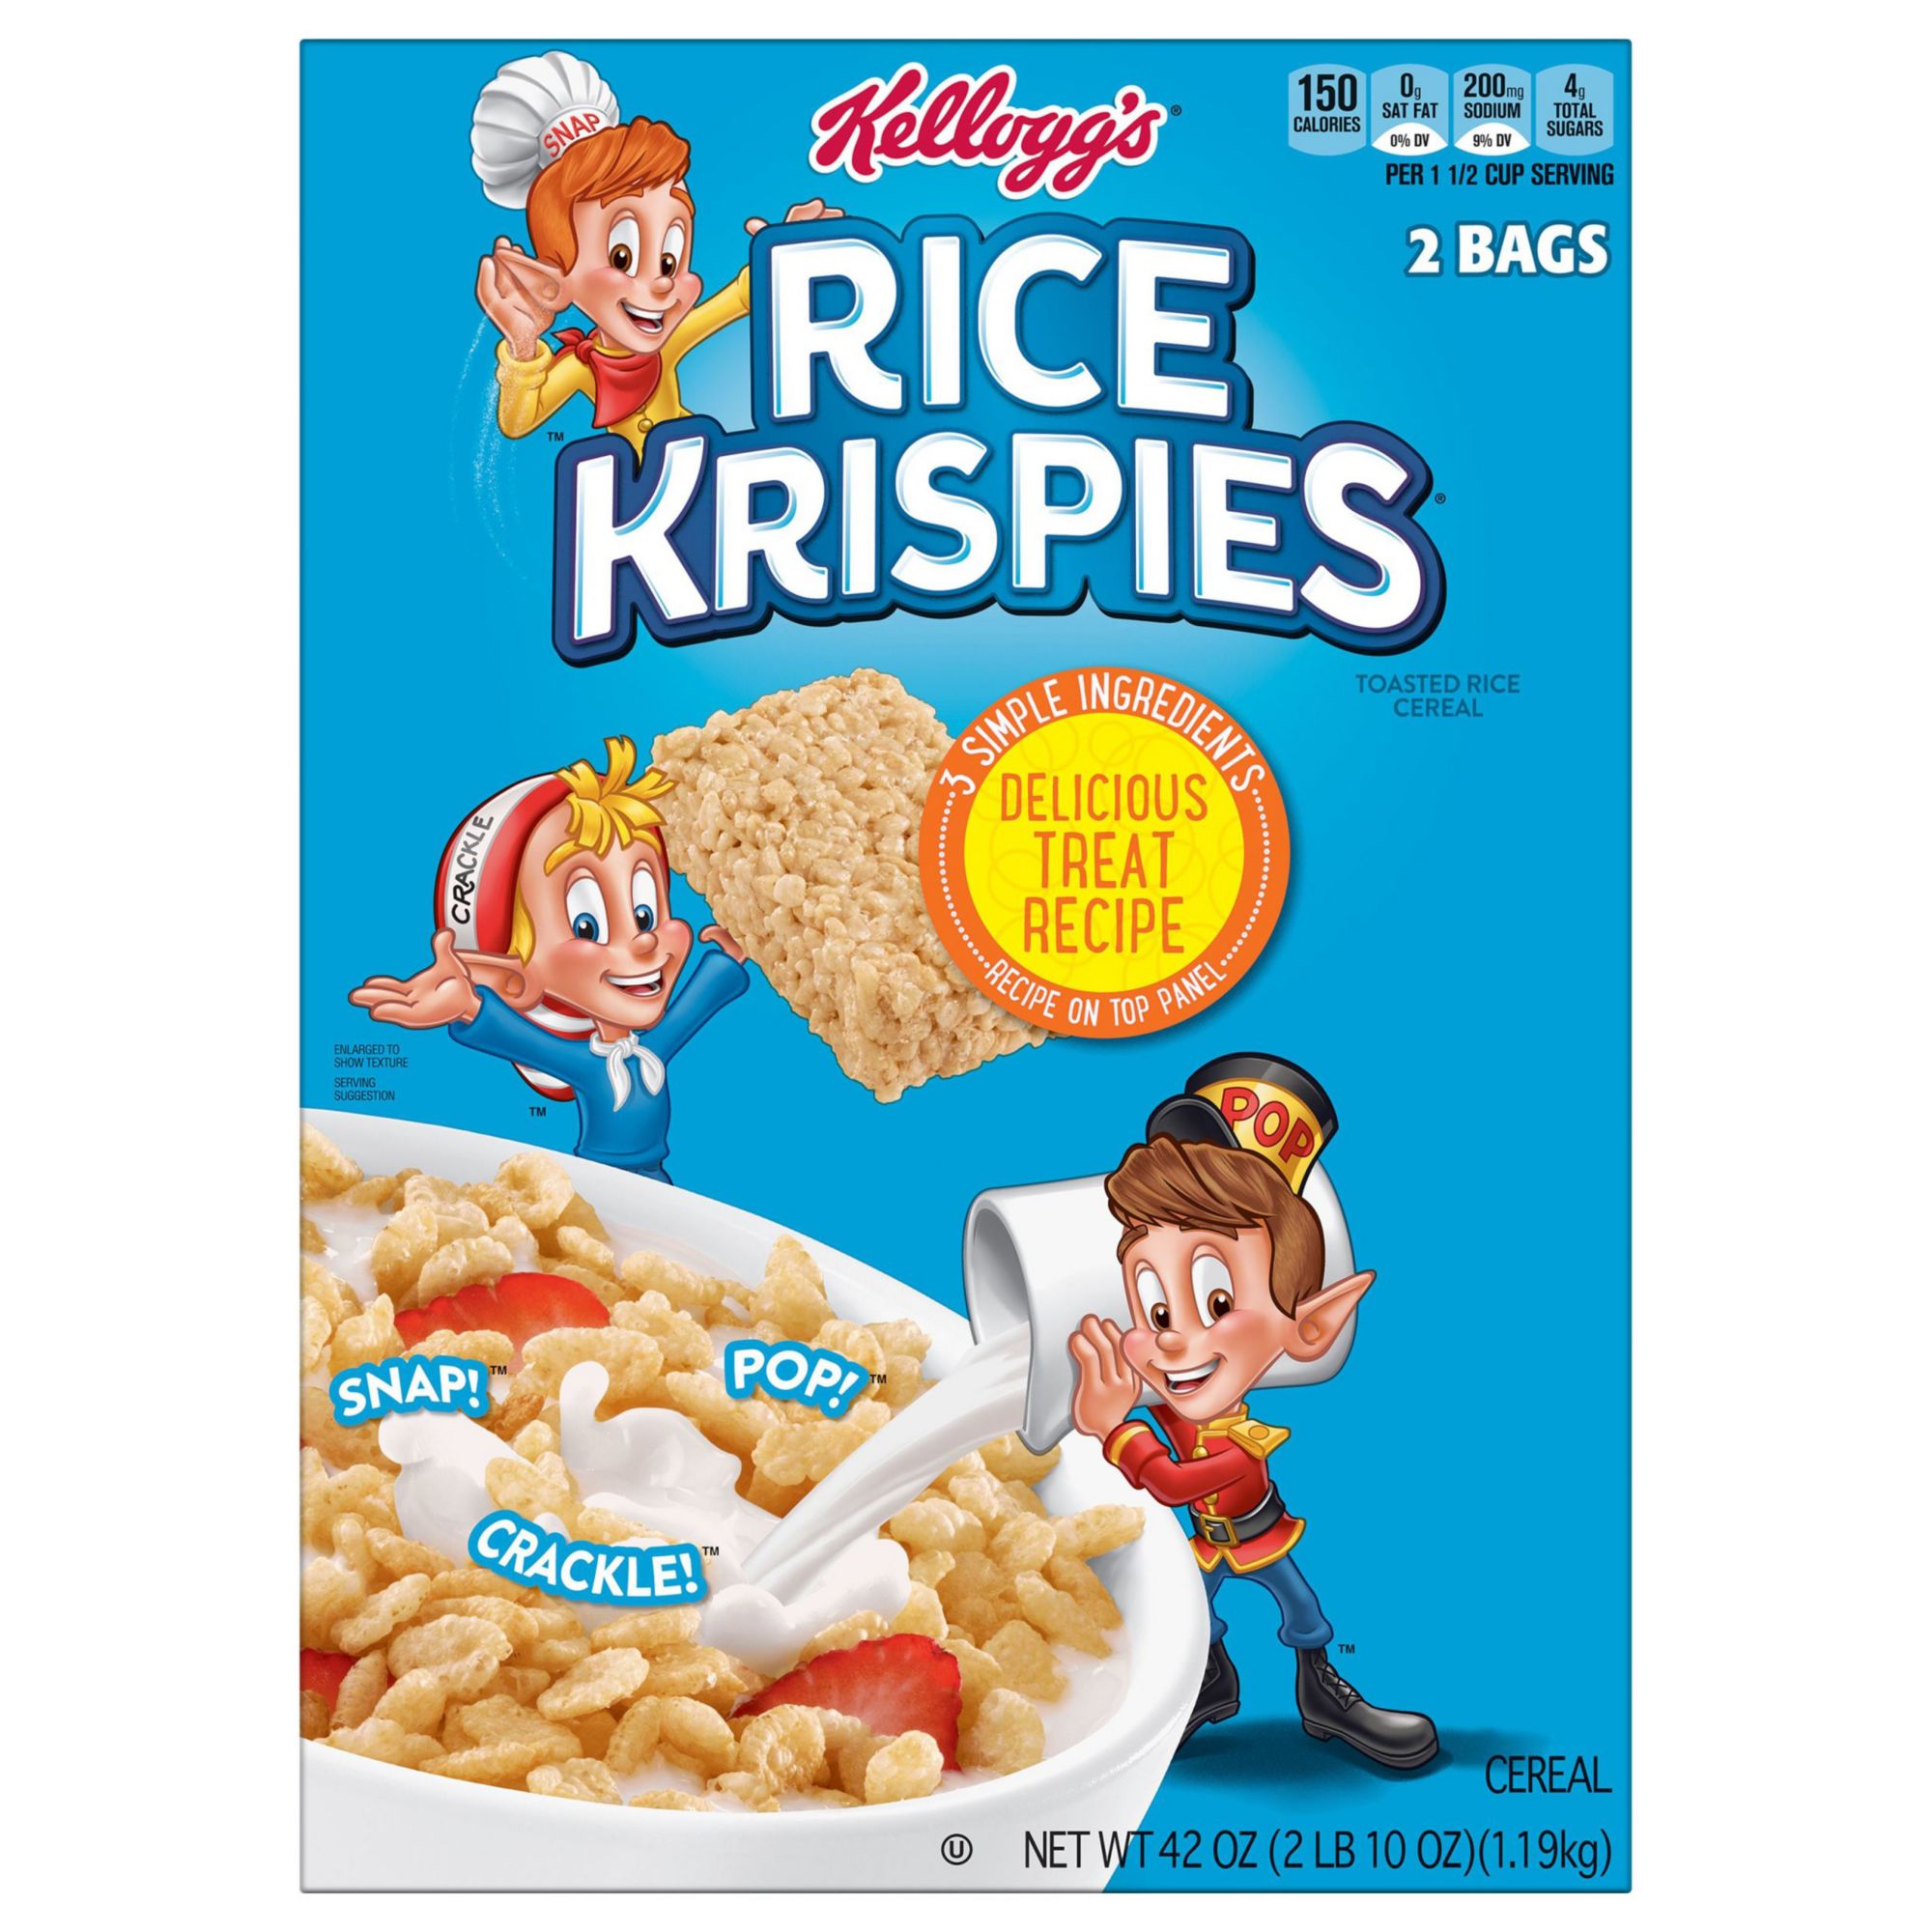 Cereal　Club　Kellogg's　Wholesale　Rice　Krispies　Breakfast　BJ's